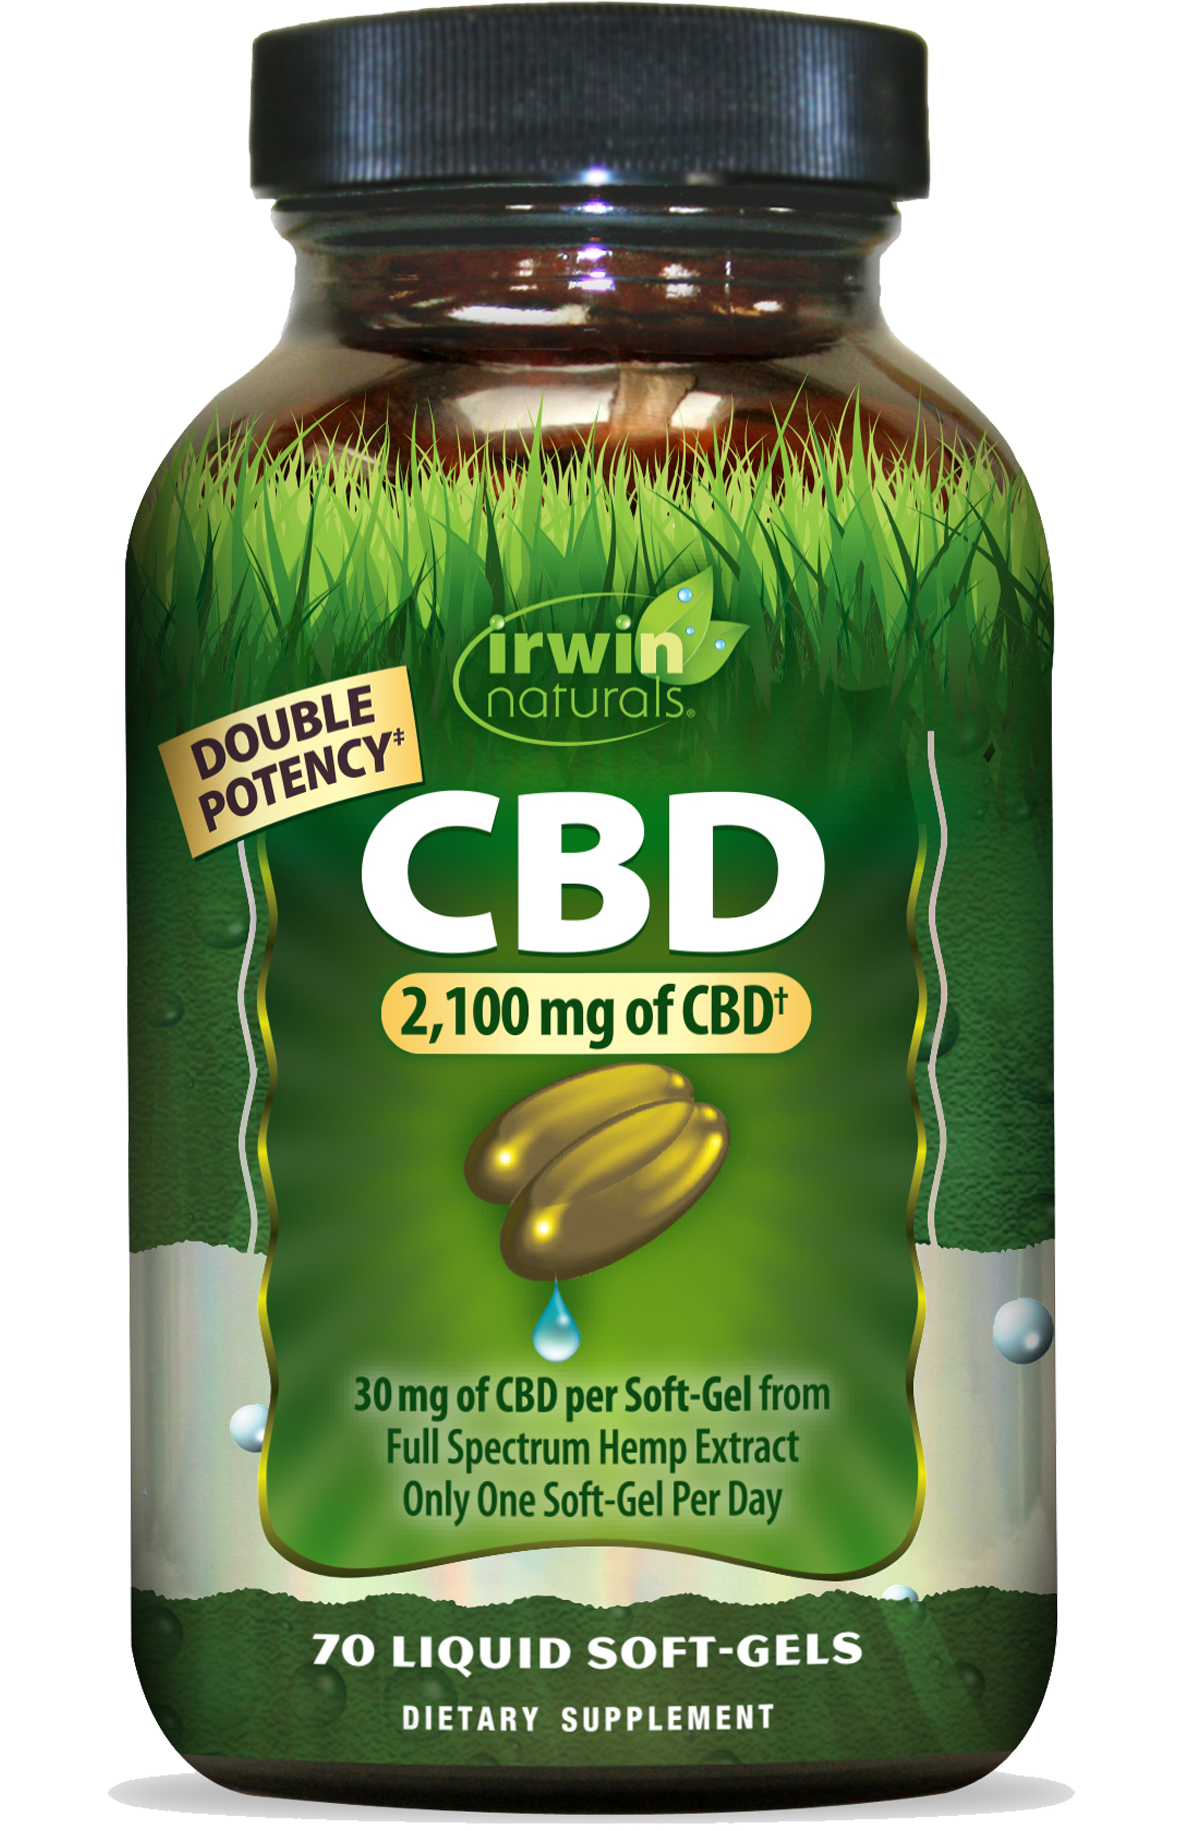 Double Potency CBD Soft Gels: 30 mg